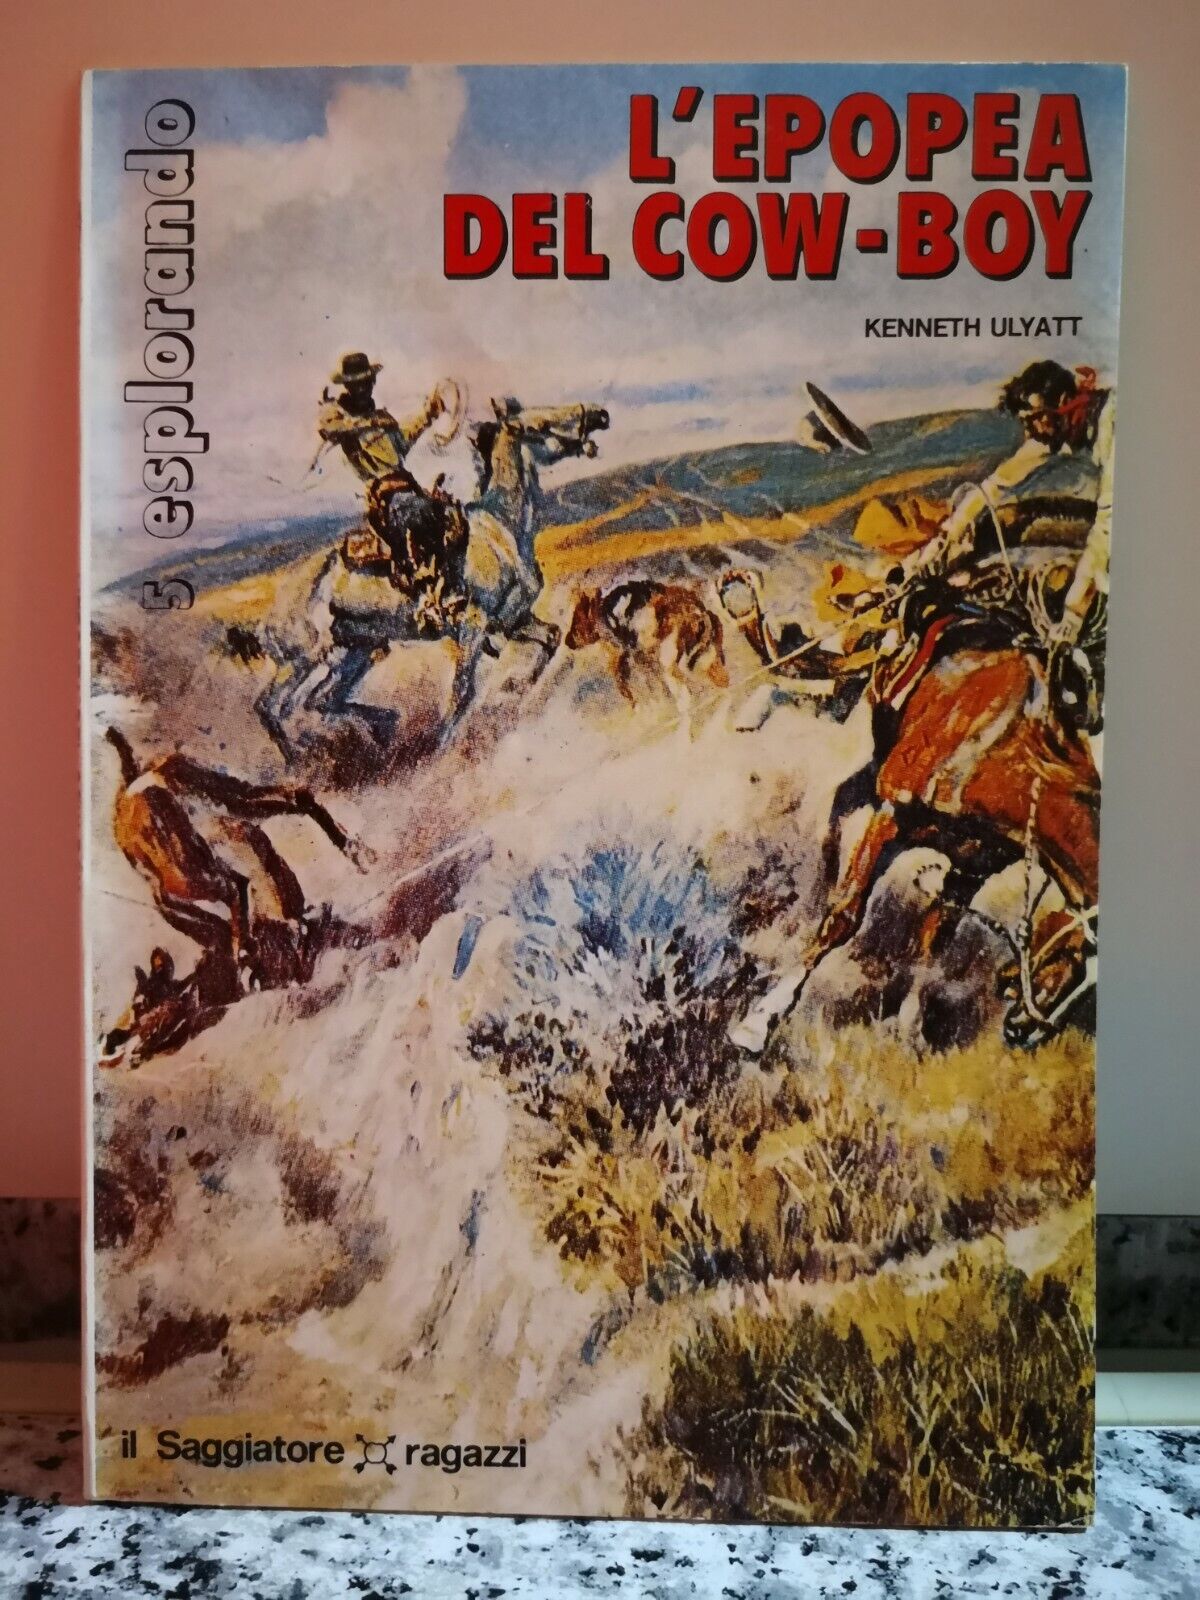  L'epopea del Caw-Boy  di Kenneth Ulyatt,  1973,  Il Saggiatore-F